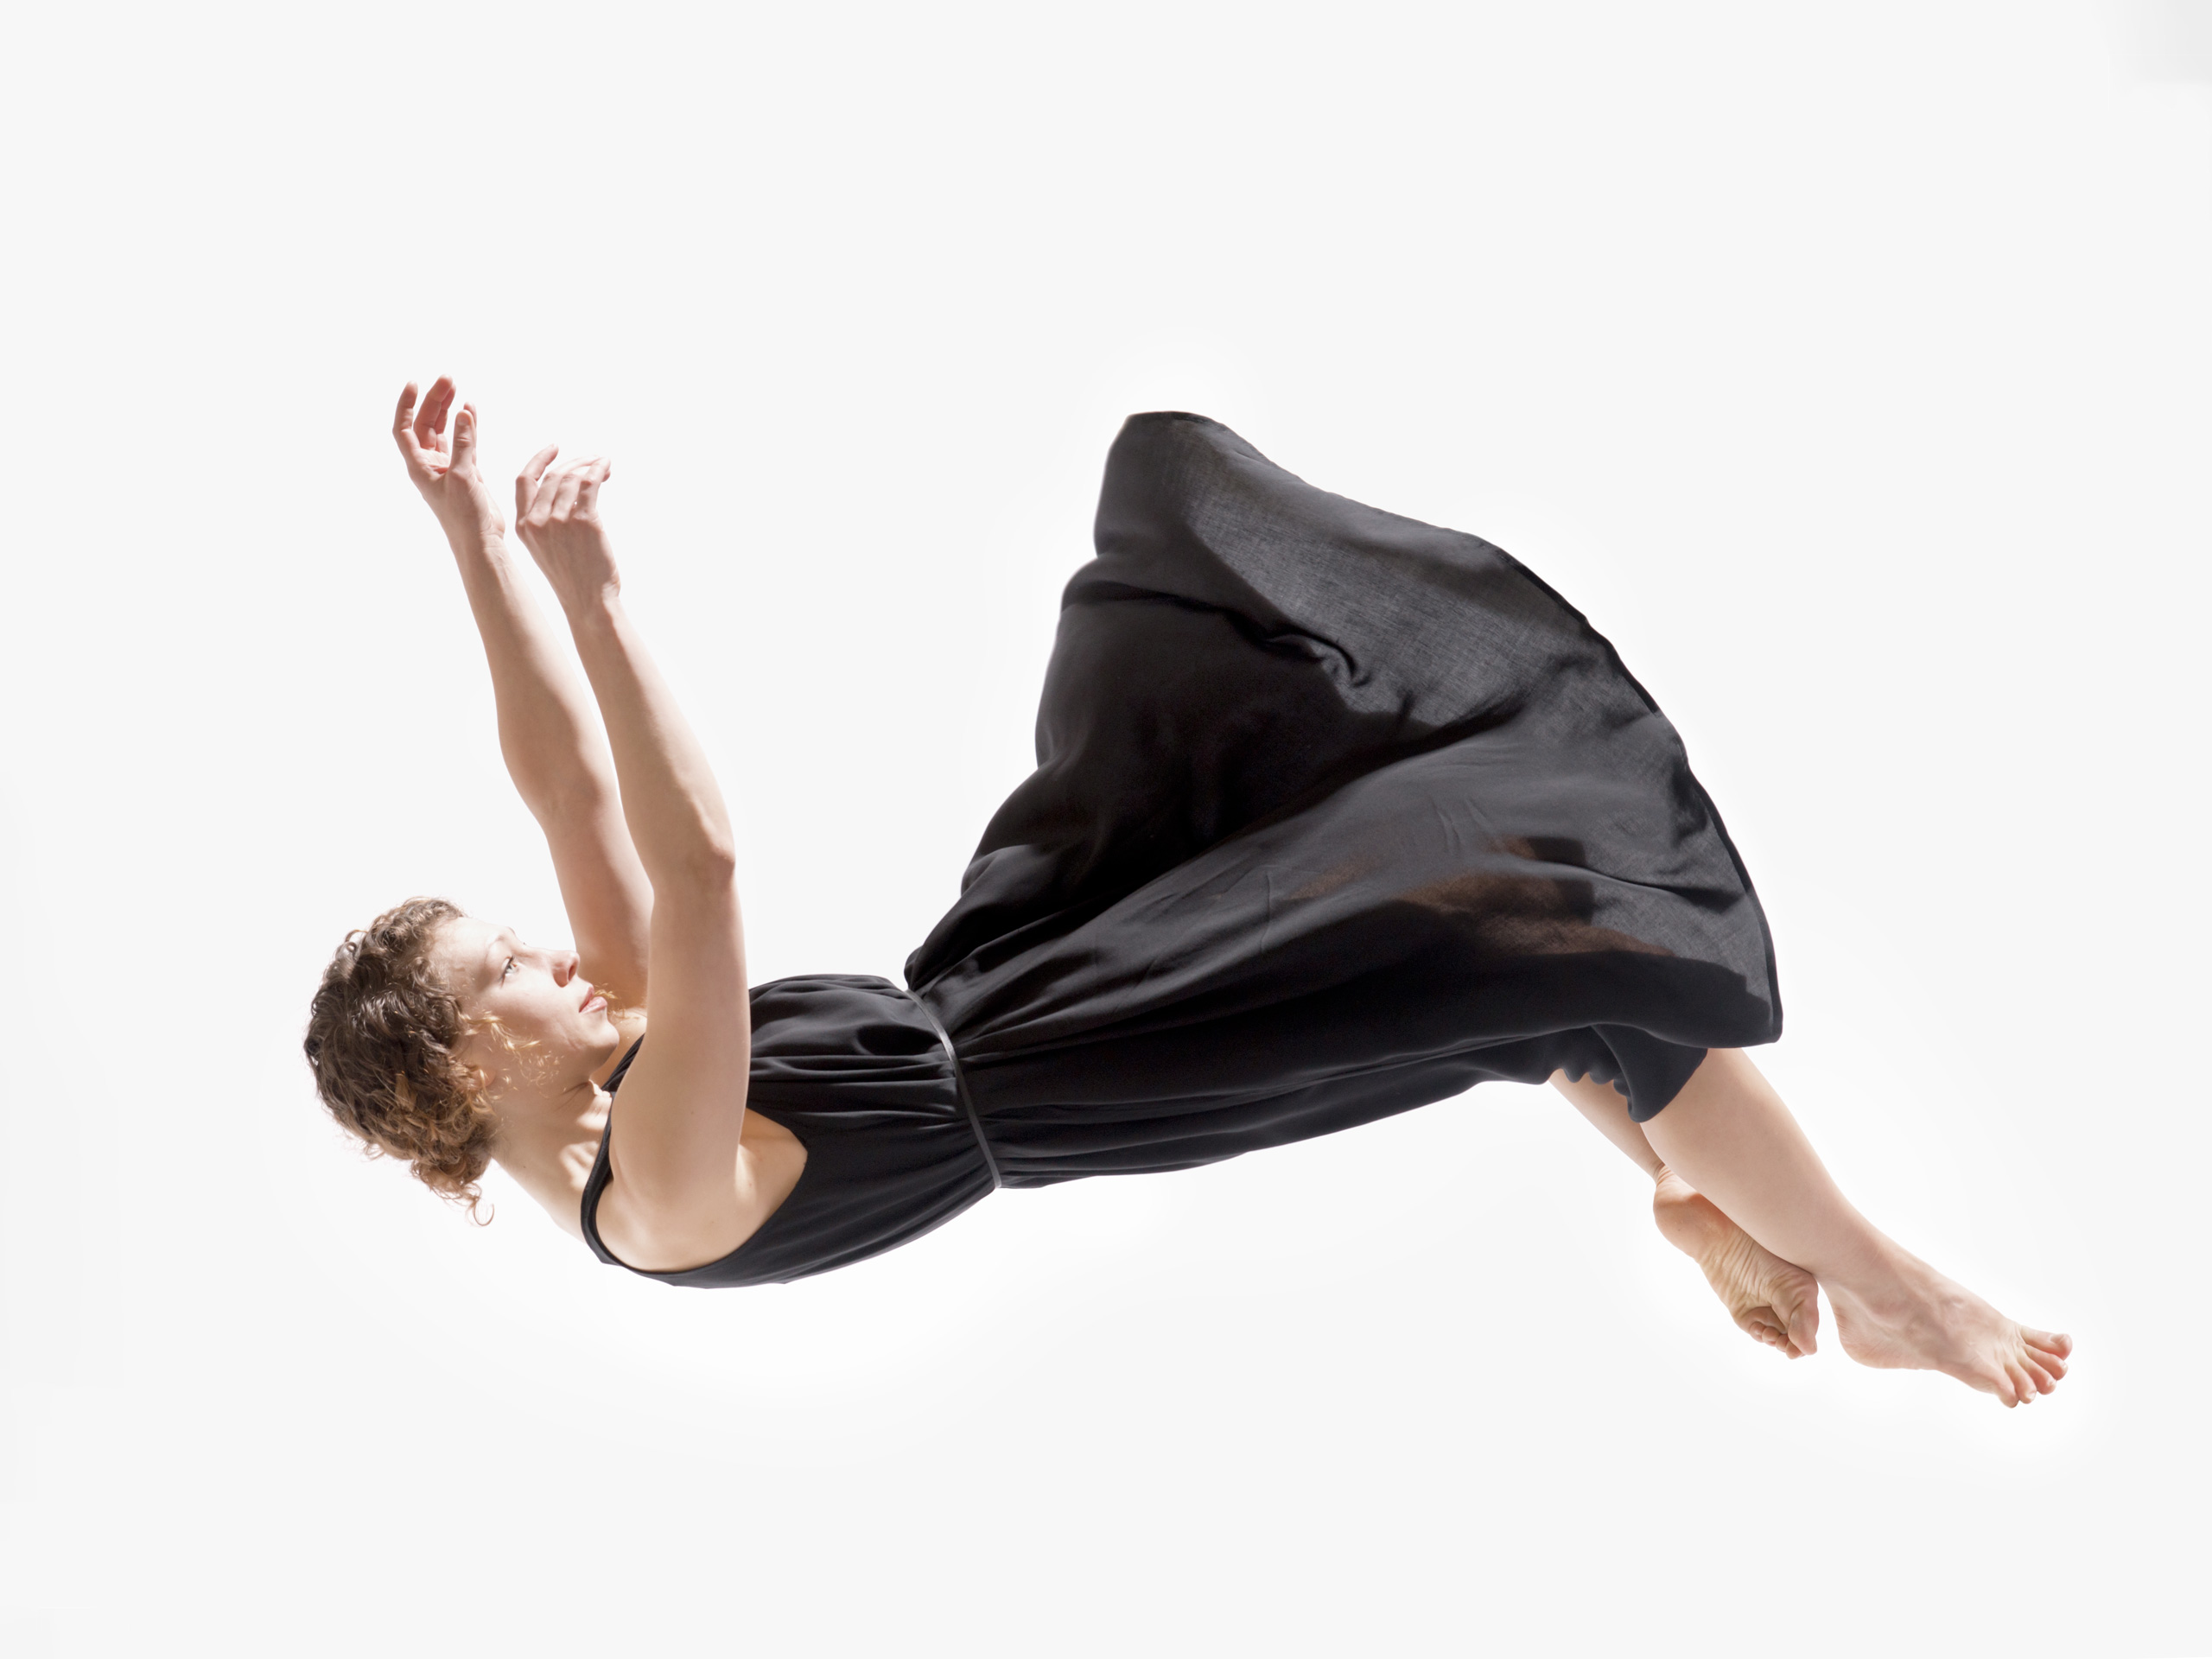 push/FOLD dancer Jessica Evans falls through the air wearing an elegant black dress on a white background in 'November' | Photography: David Krebs